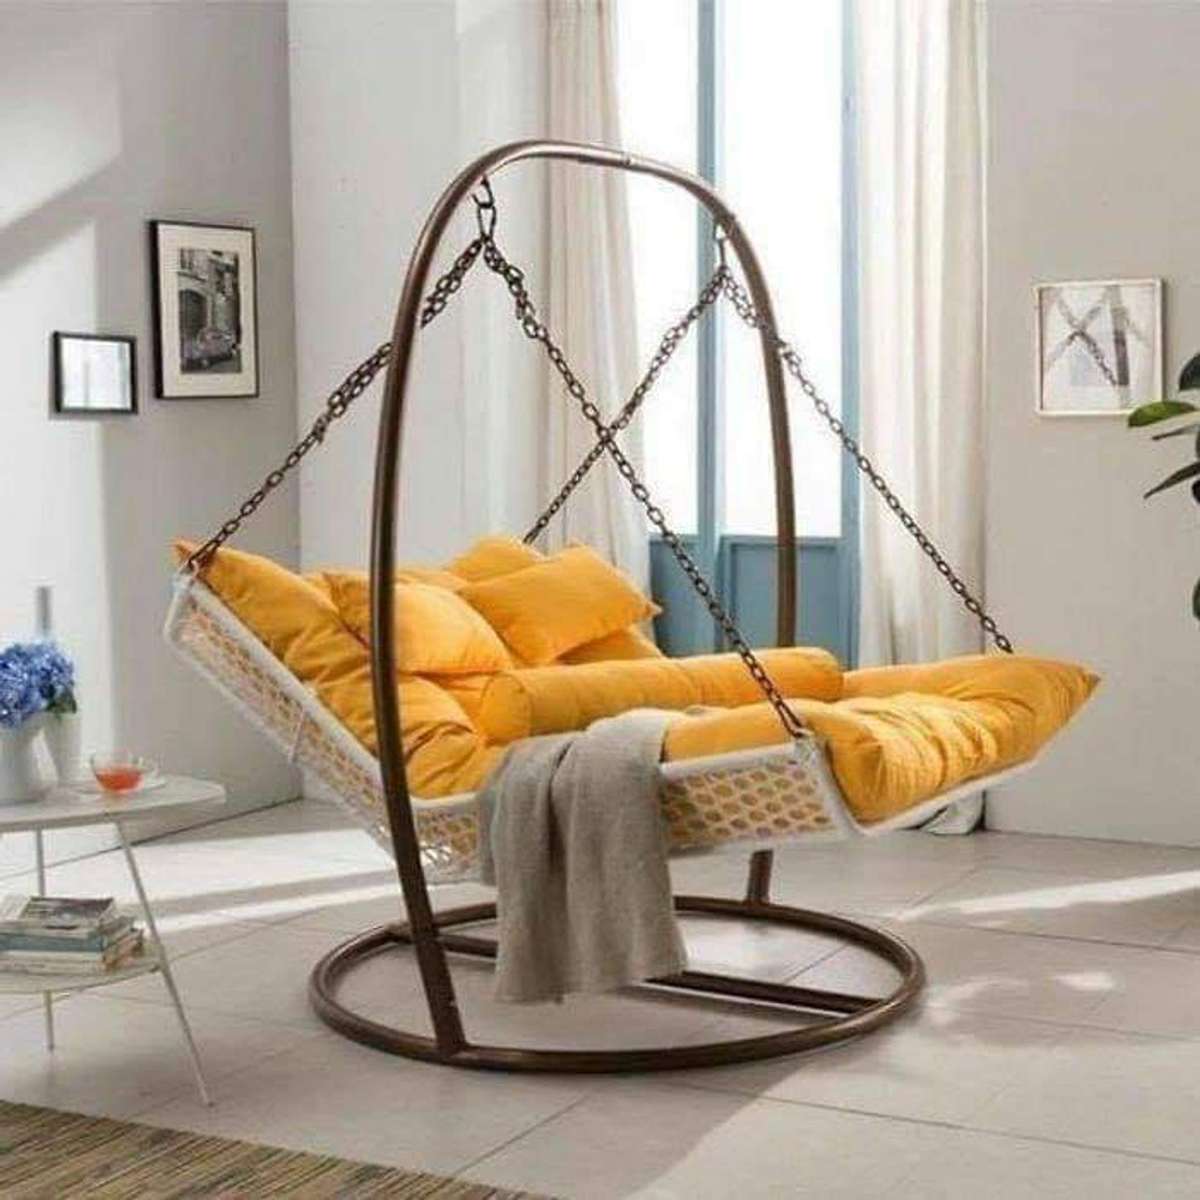 #Hangingchairs

Beutiful hanging chair ideas